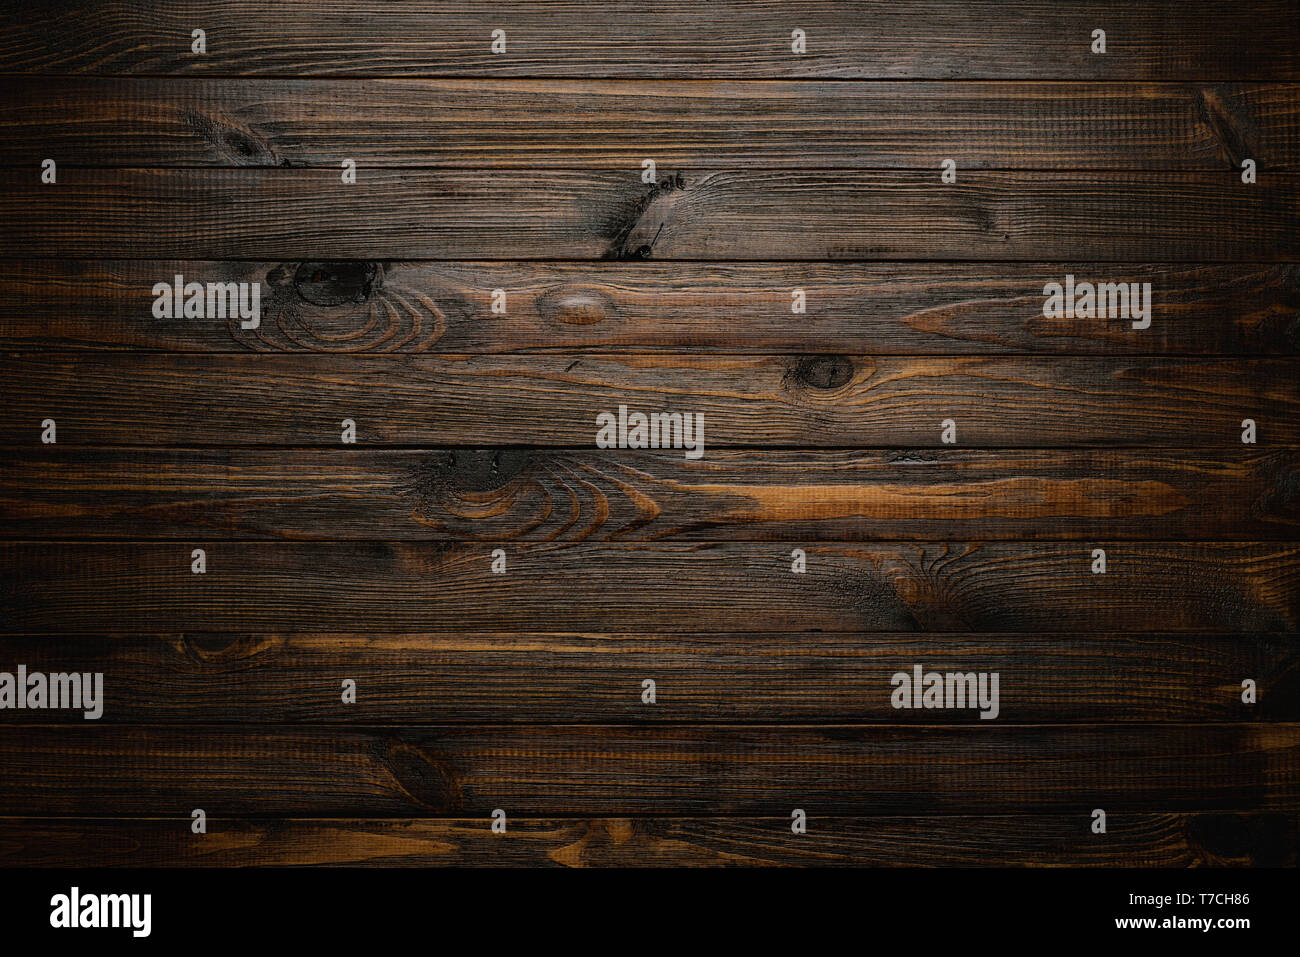 Fondo de madera natural. Textura de madera. Tabla de tablones rústicos negra plana superior vista laical. Foto de stock